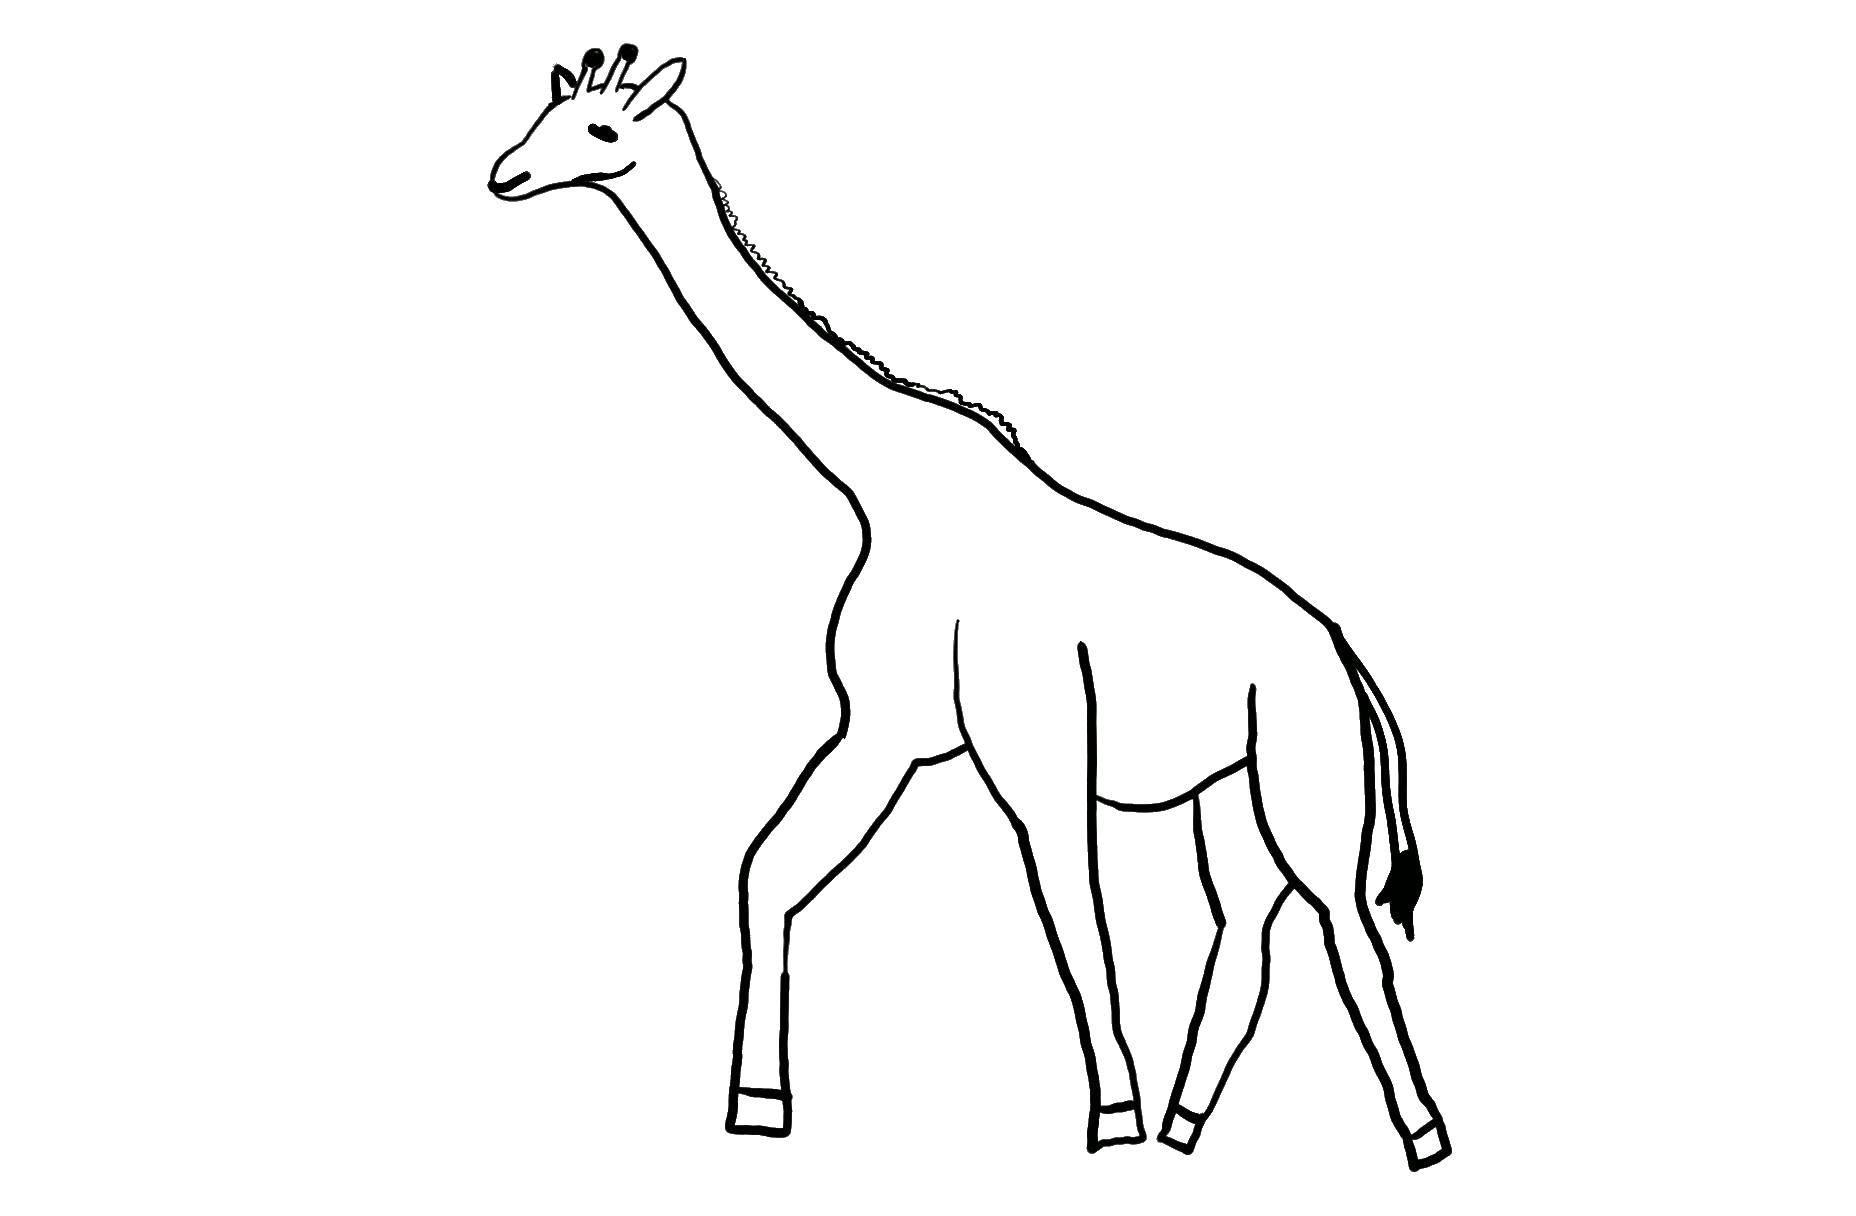 Coloring Giraffe. Category Animals. Tags:  animals, giraffe.